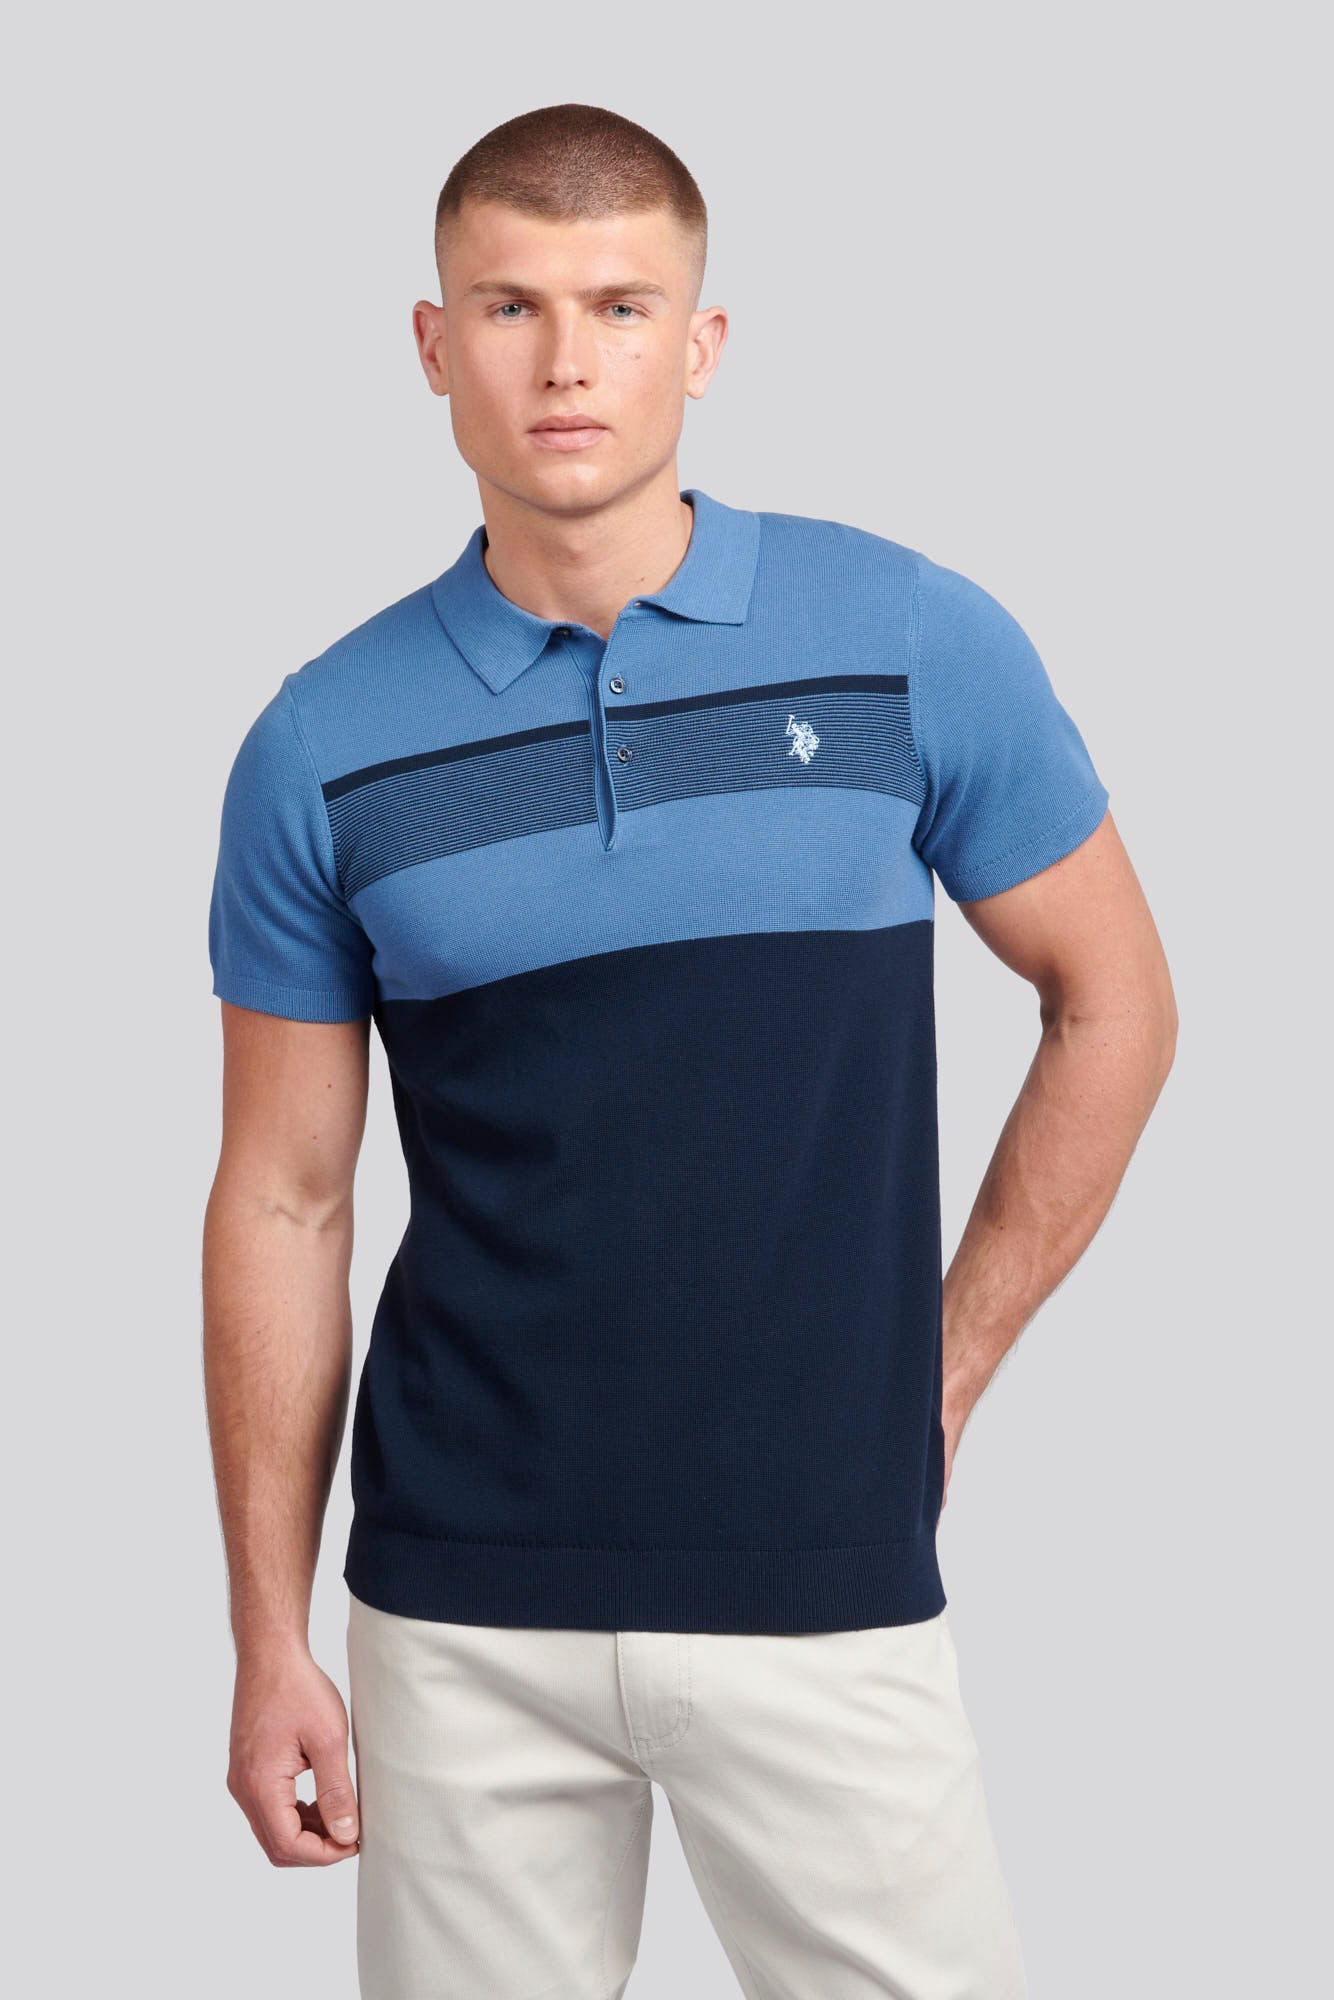 U.S. Polo Assn. Mens Regular Fit Stripe Knit Polo Shirt in Blue Horizon